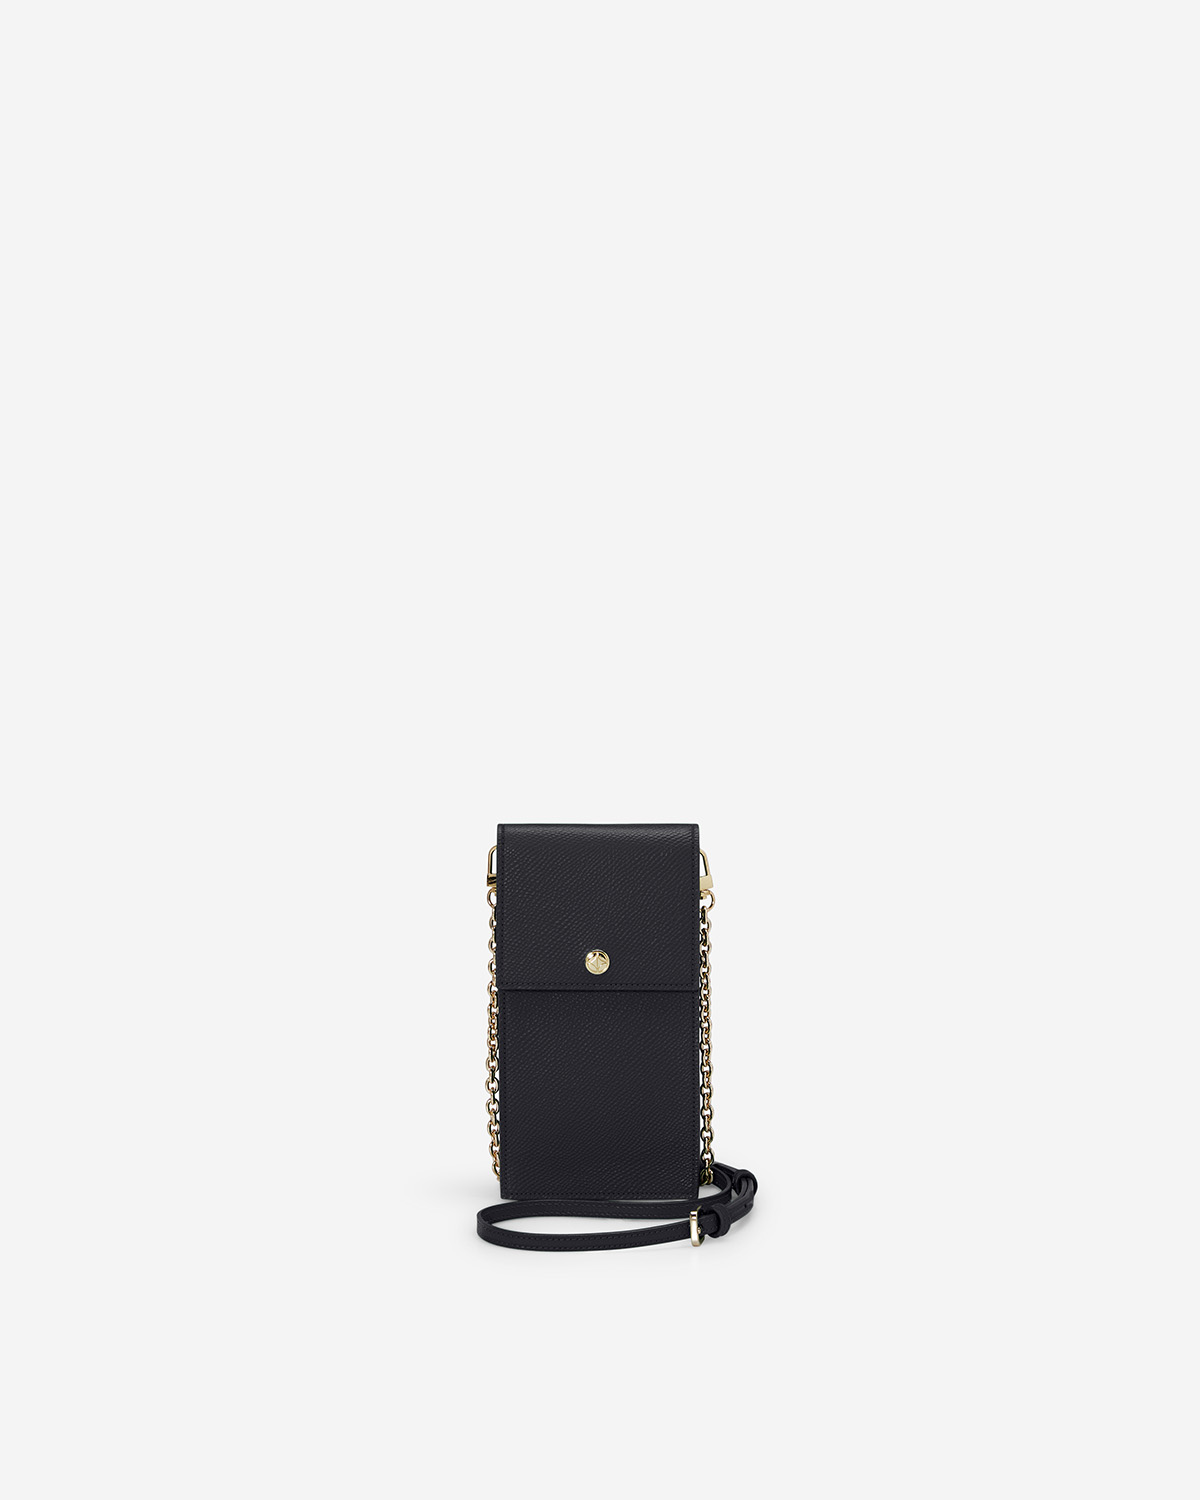 VERA Emily Phone Pouch with Leather Gold Chain in Powerful Black กระเป๋าใส่โทรศัพท์หนังแท้ พร้อมฟังก์ชั่นกระเป๋าสตางค์ มาพร้อมสายสะพายโซ่หนังถอดได้ สีดำ